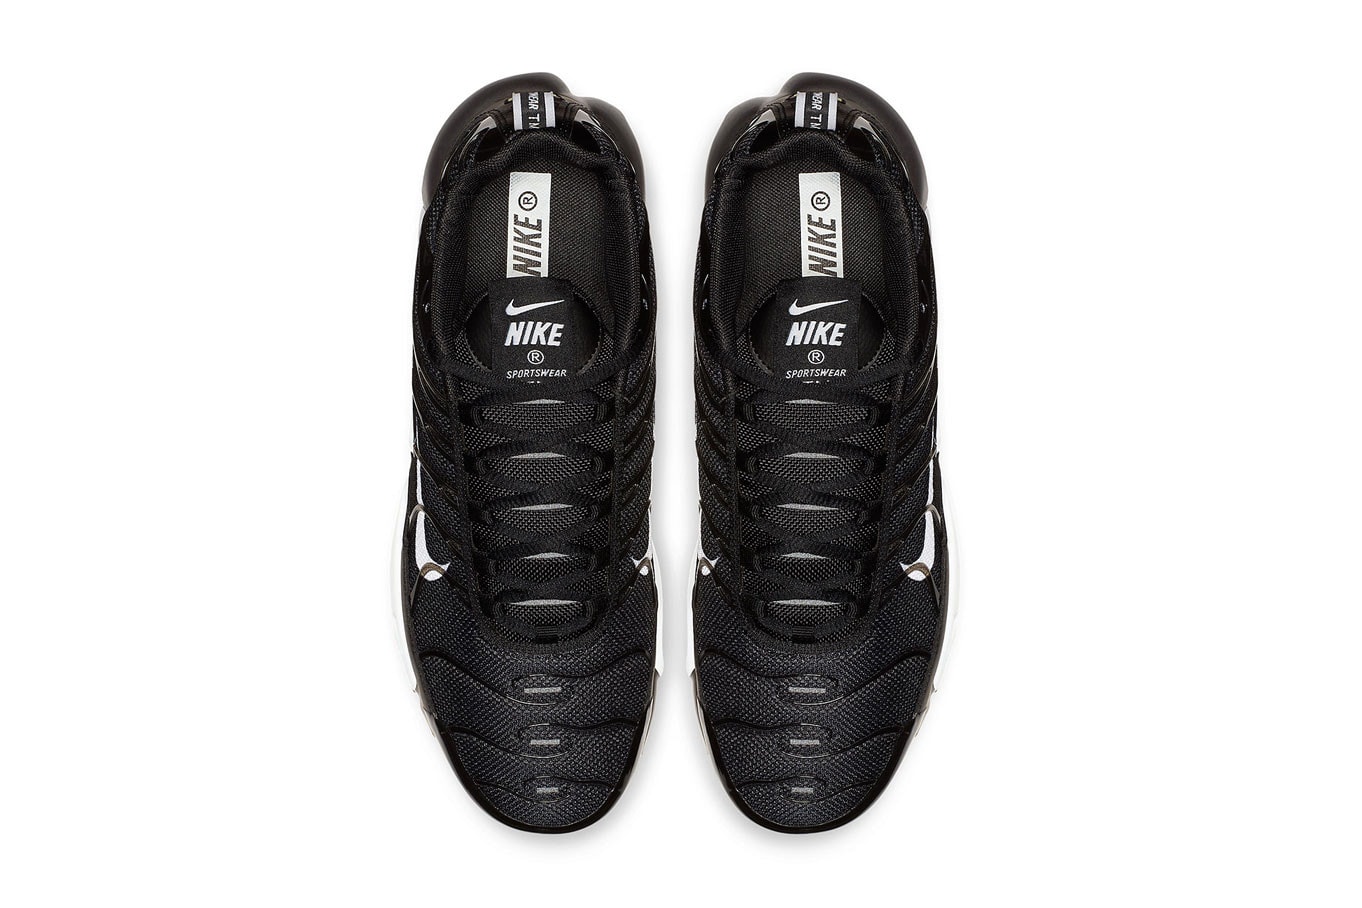 Nike Air Max Plus “Overbranding” Series Double Swoosh Black White Sneaker Shoe 